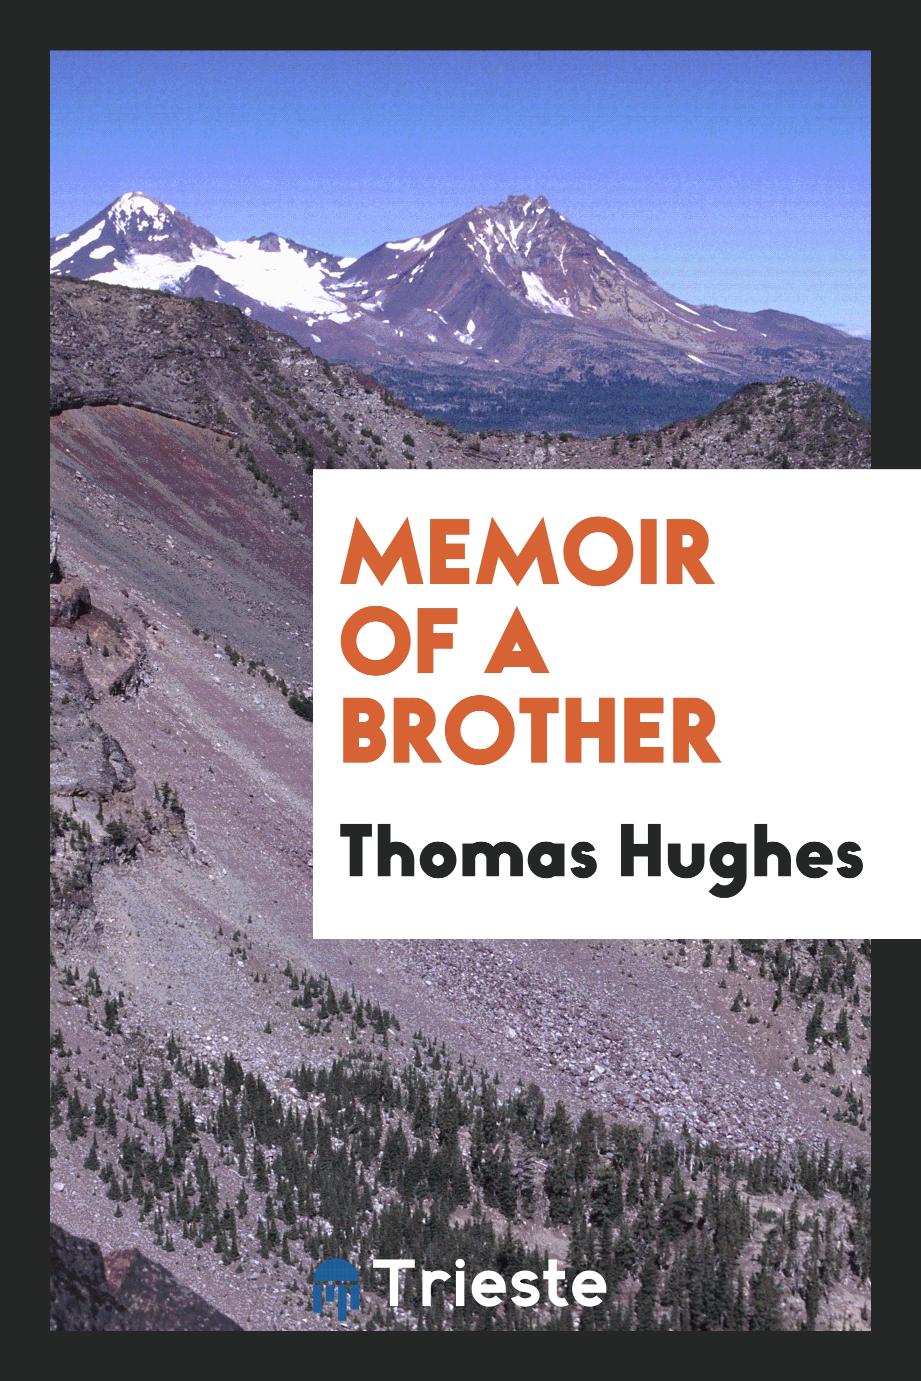 Memoir of a brother